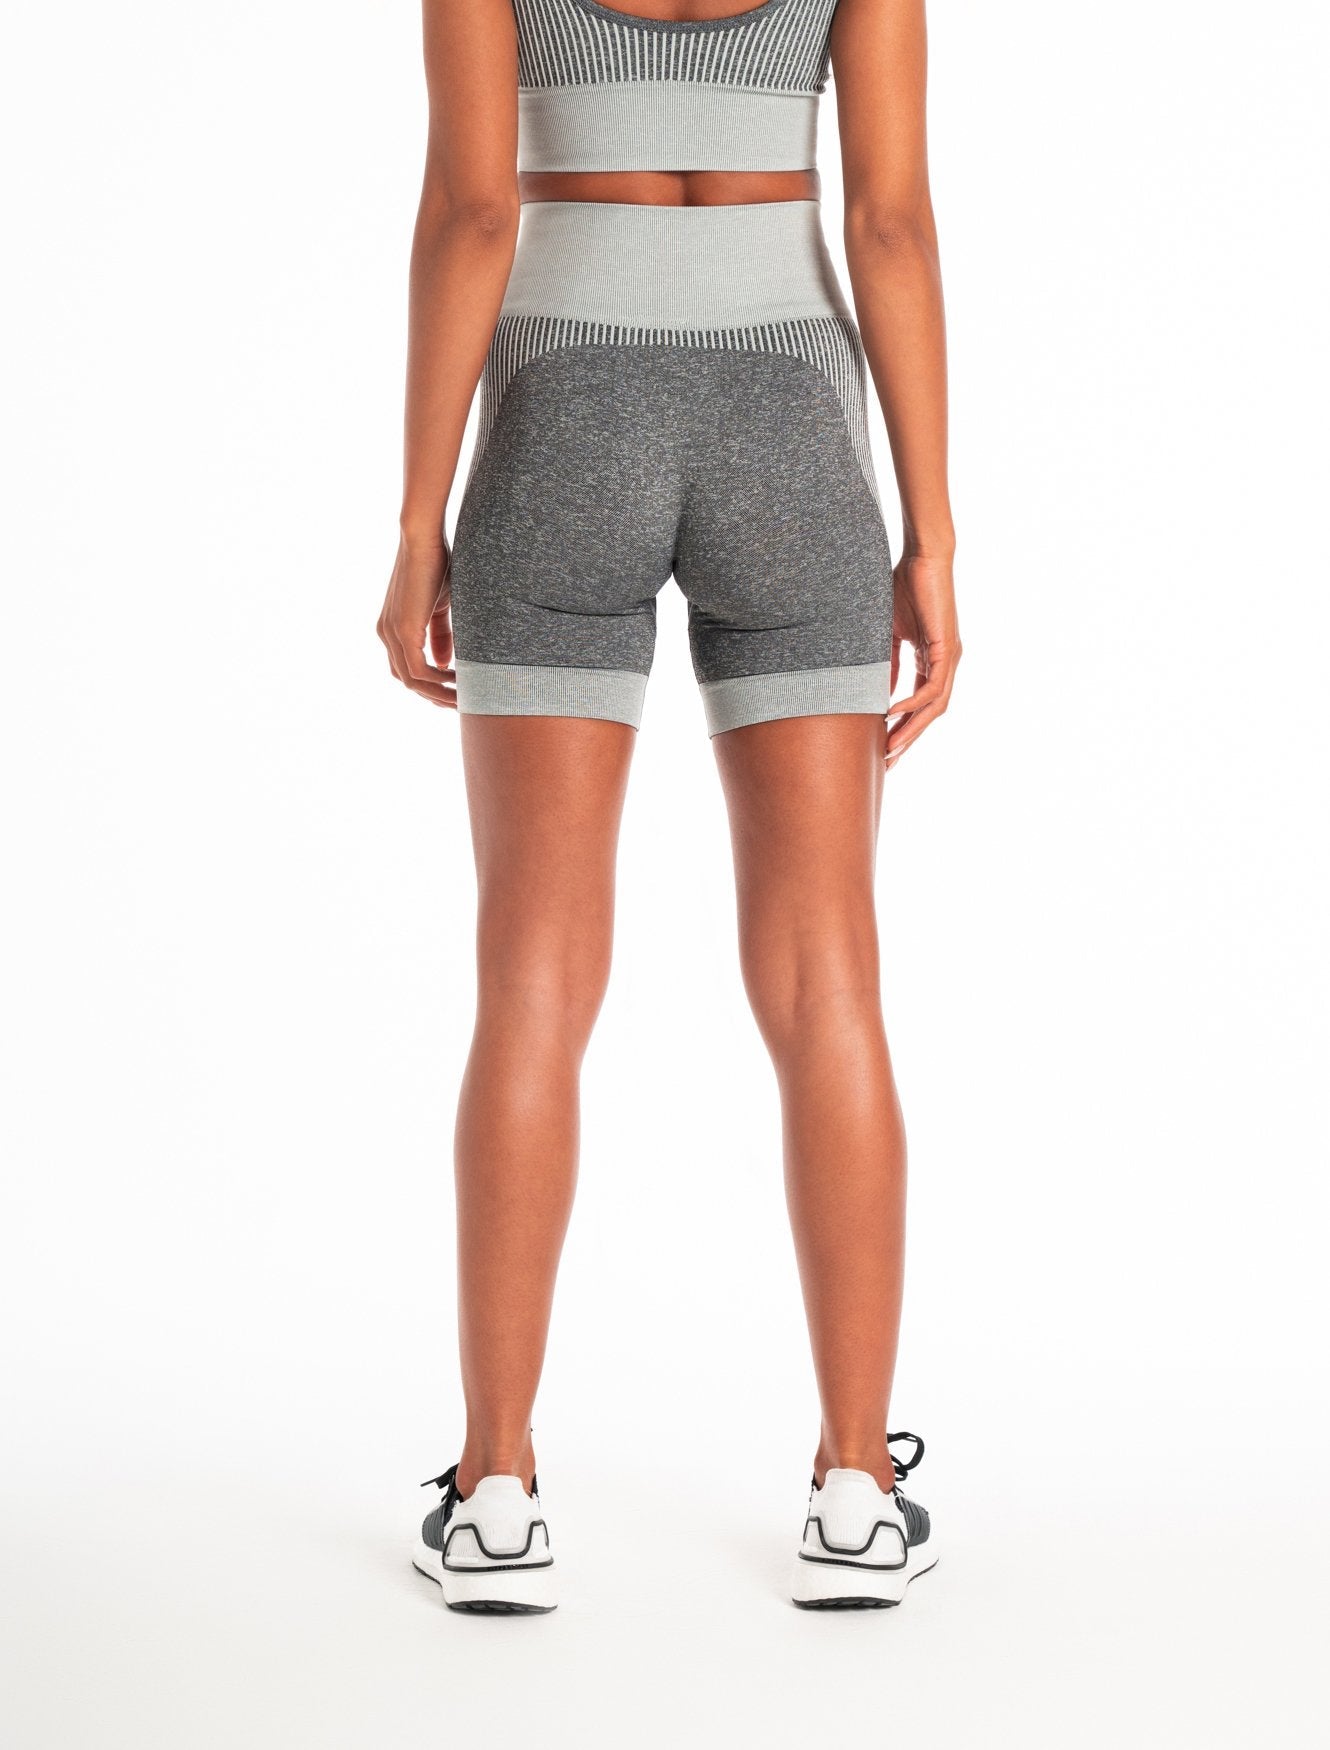 ADAPT Seamless Shorts / Light Grey Pursue Fitness 5